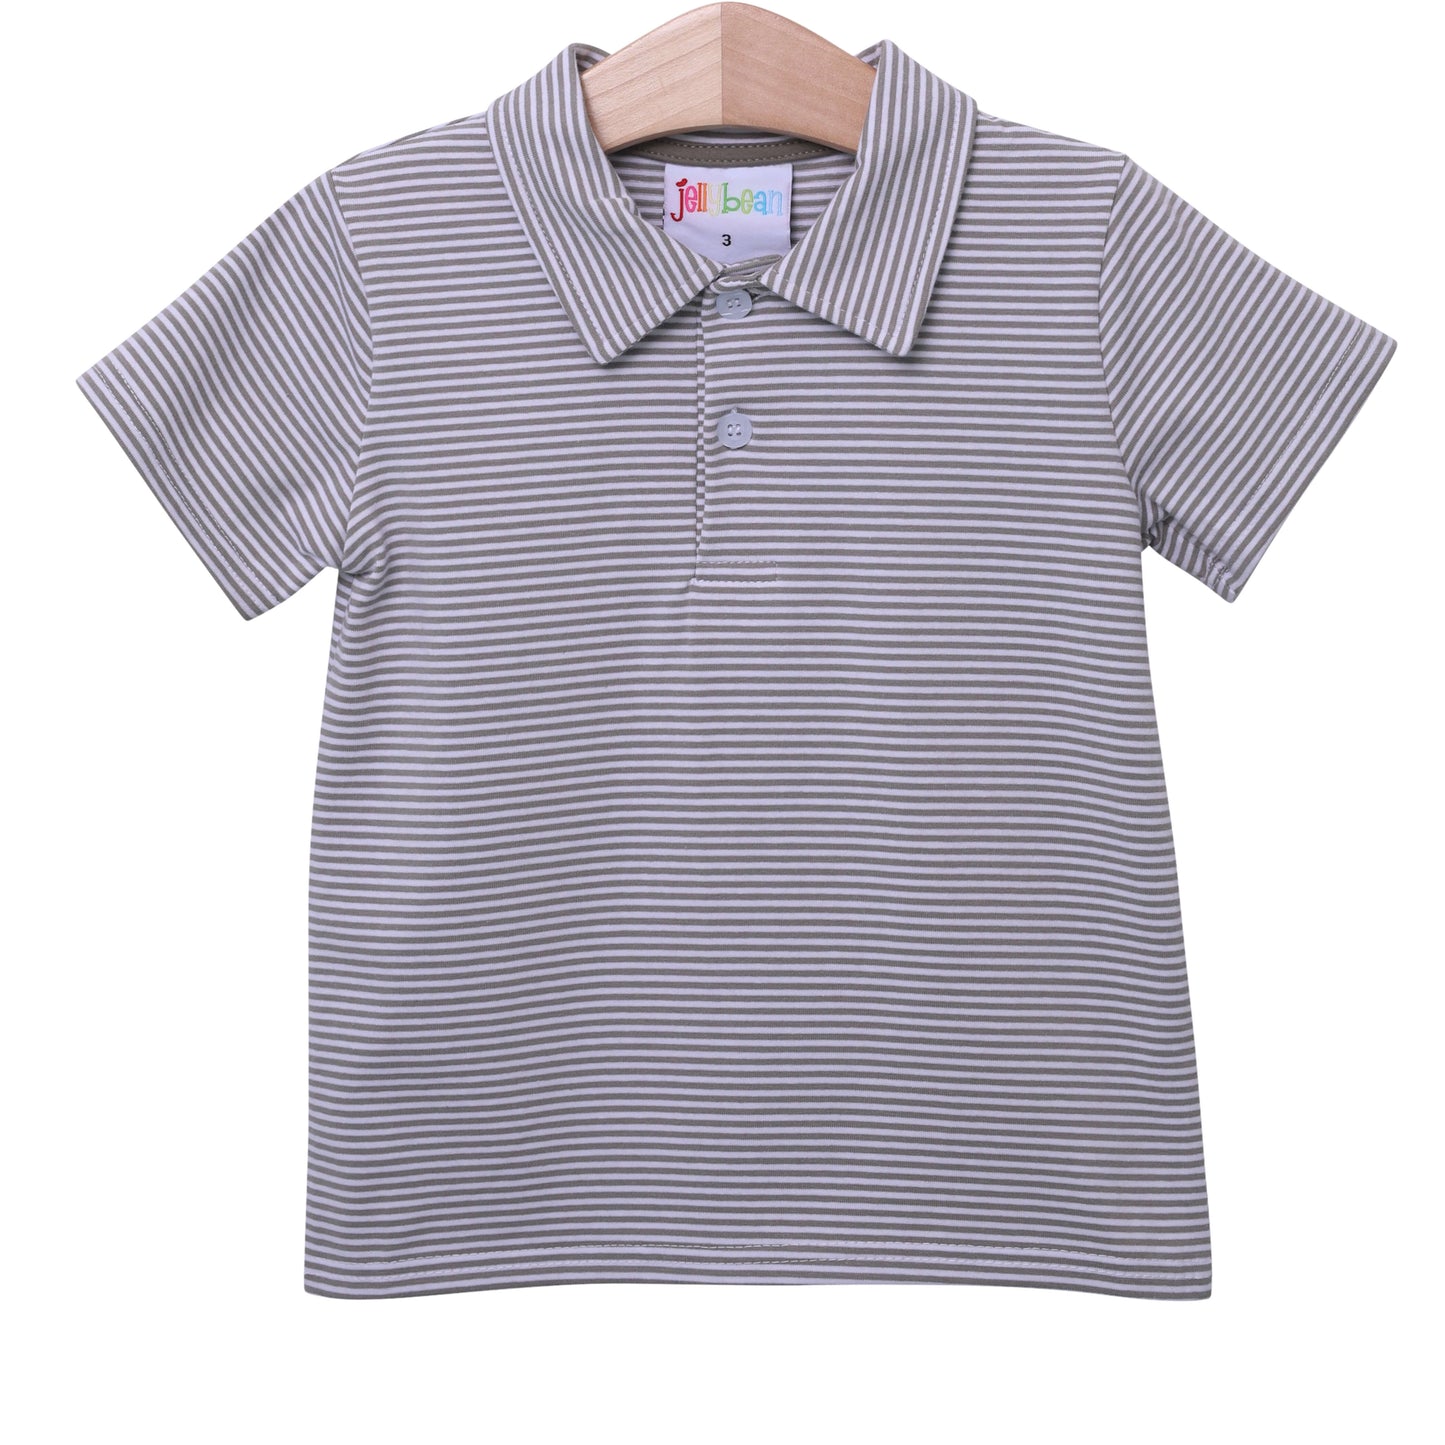 Boys Polo Shirt - Beige Stripe